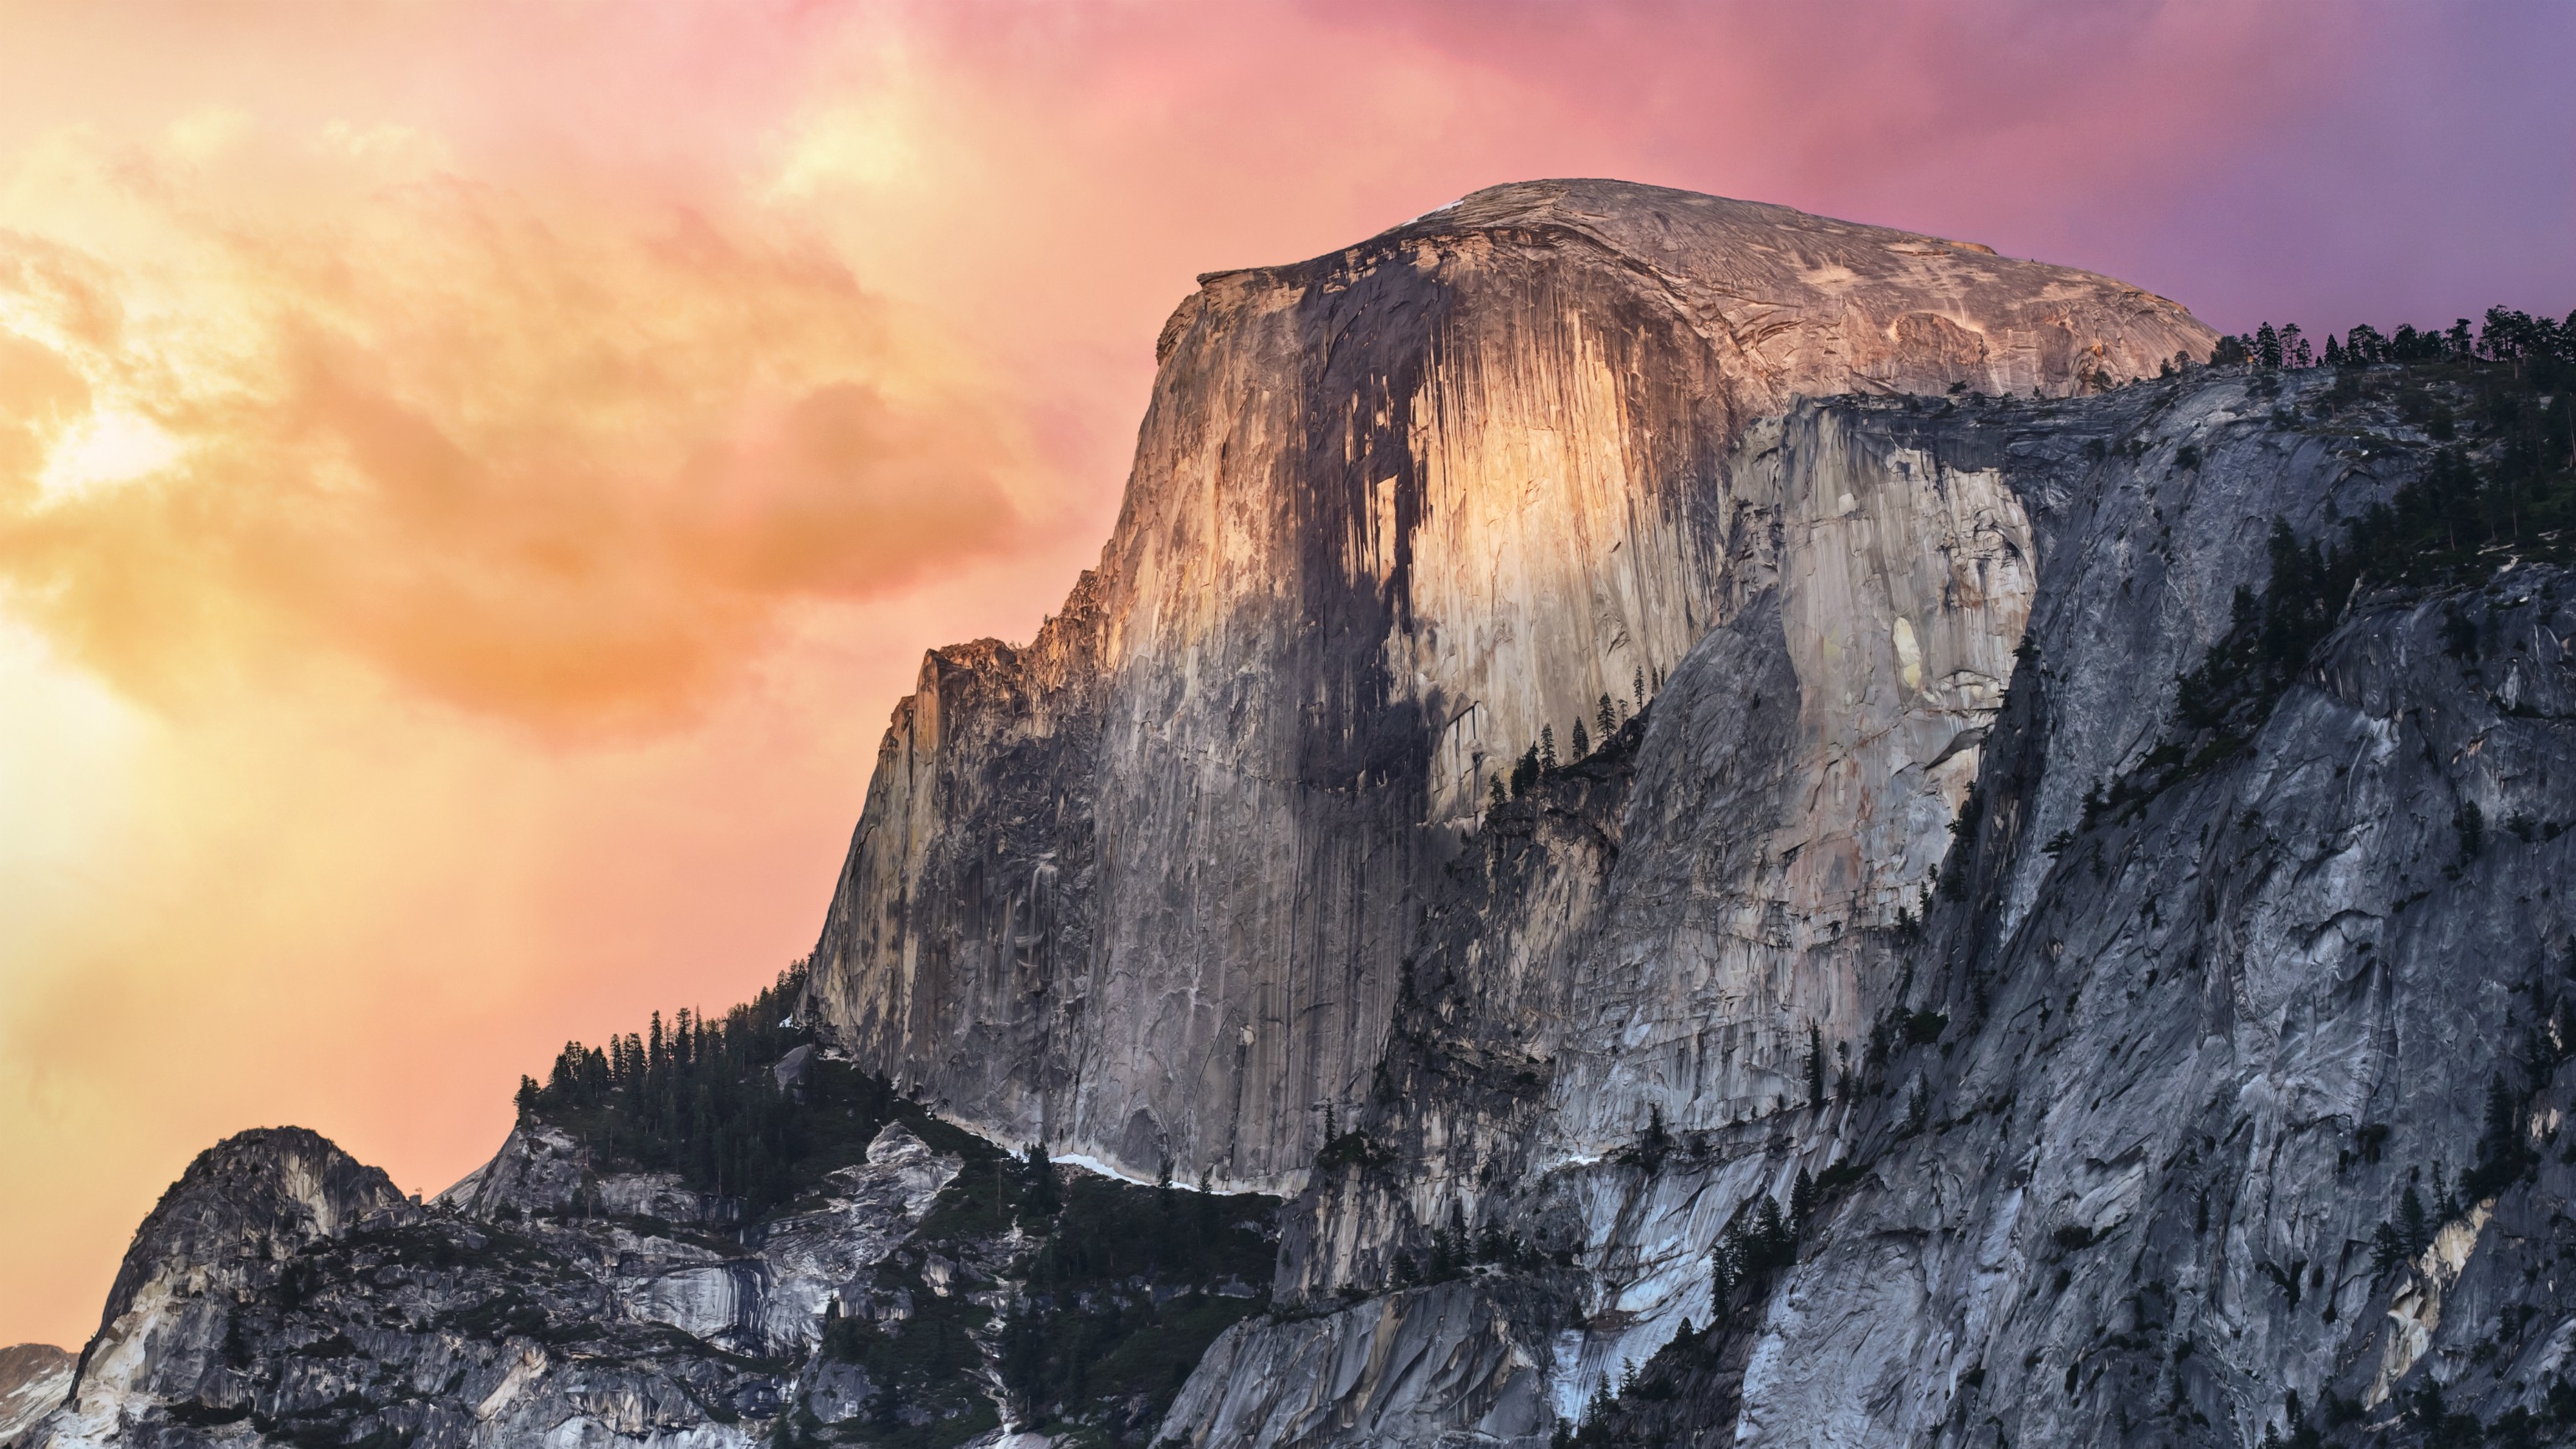 General 3080x1733 nature landscape mountains Yosemite National Park cliff Half Dome rocks USA California